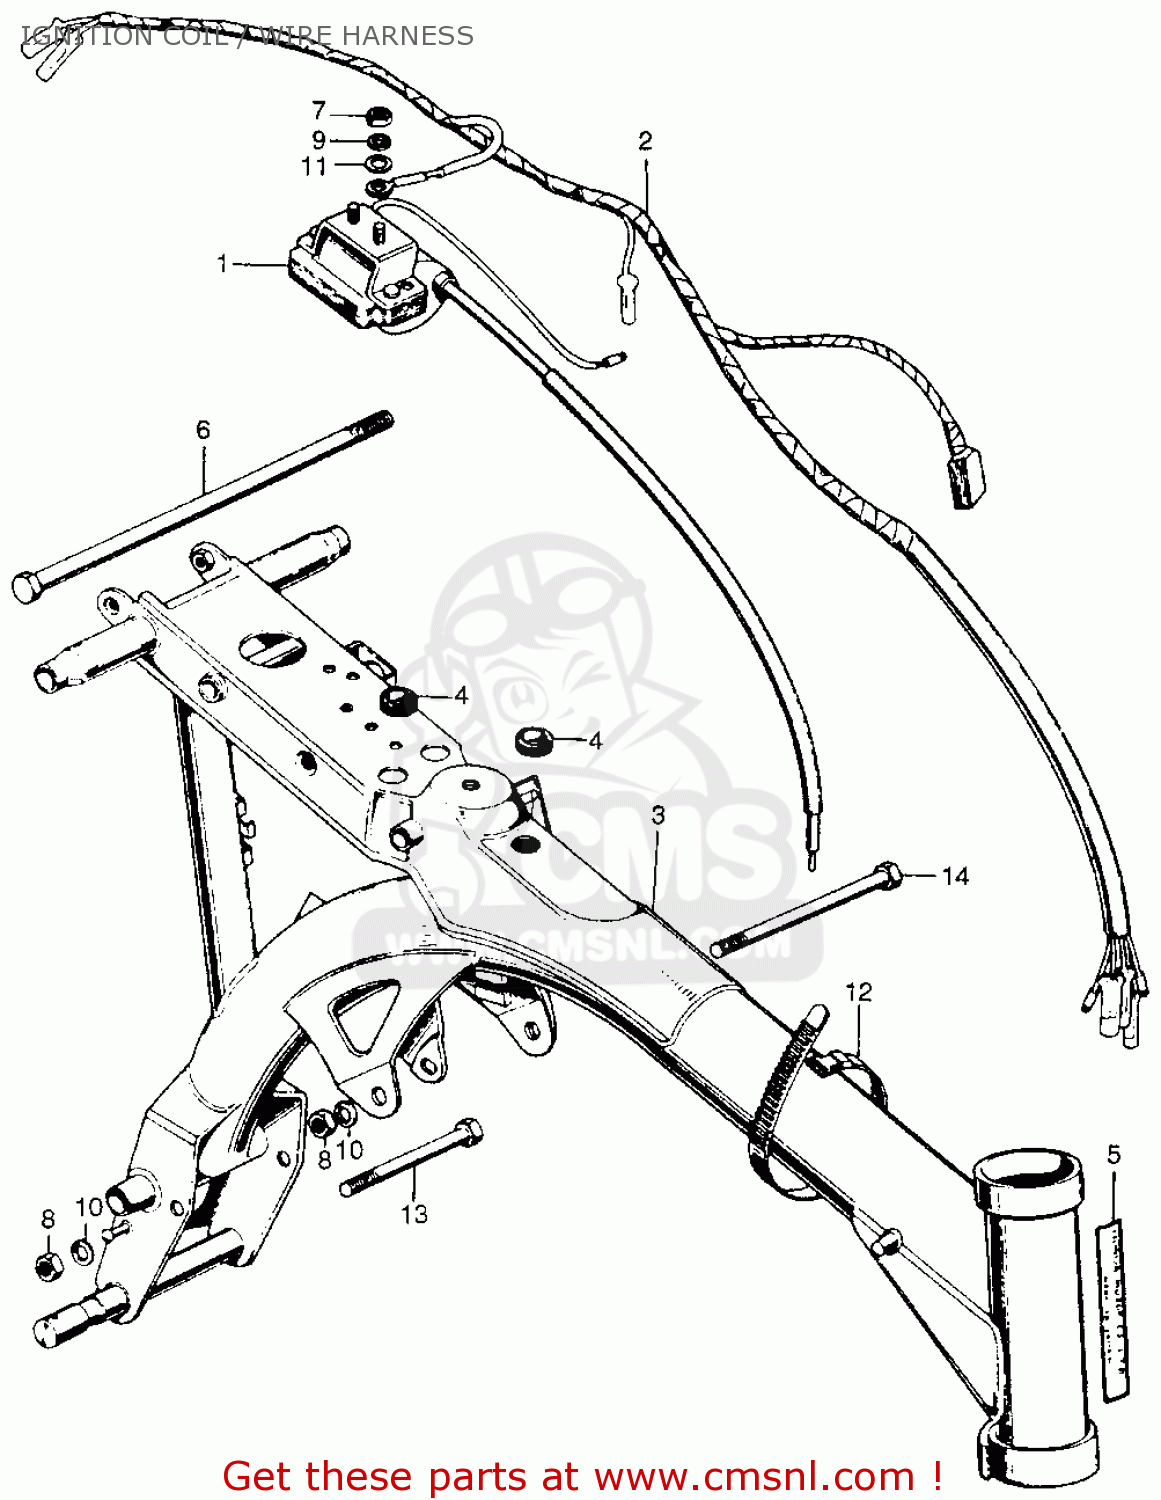 Wiring Harnes Honda Ct90 K4 - Wiring Diagram Schemas